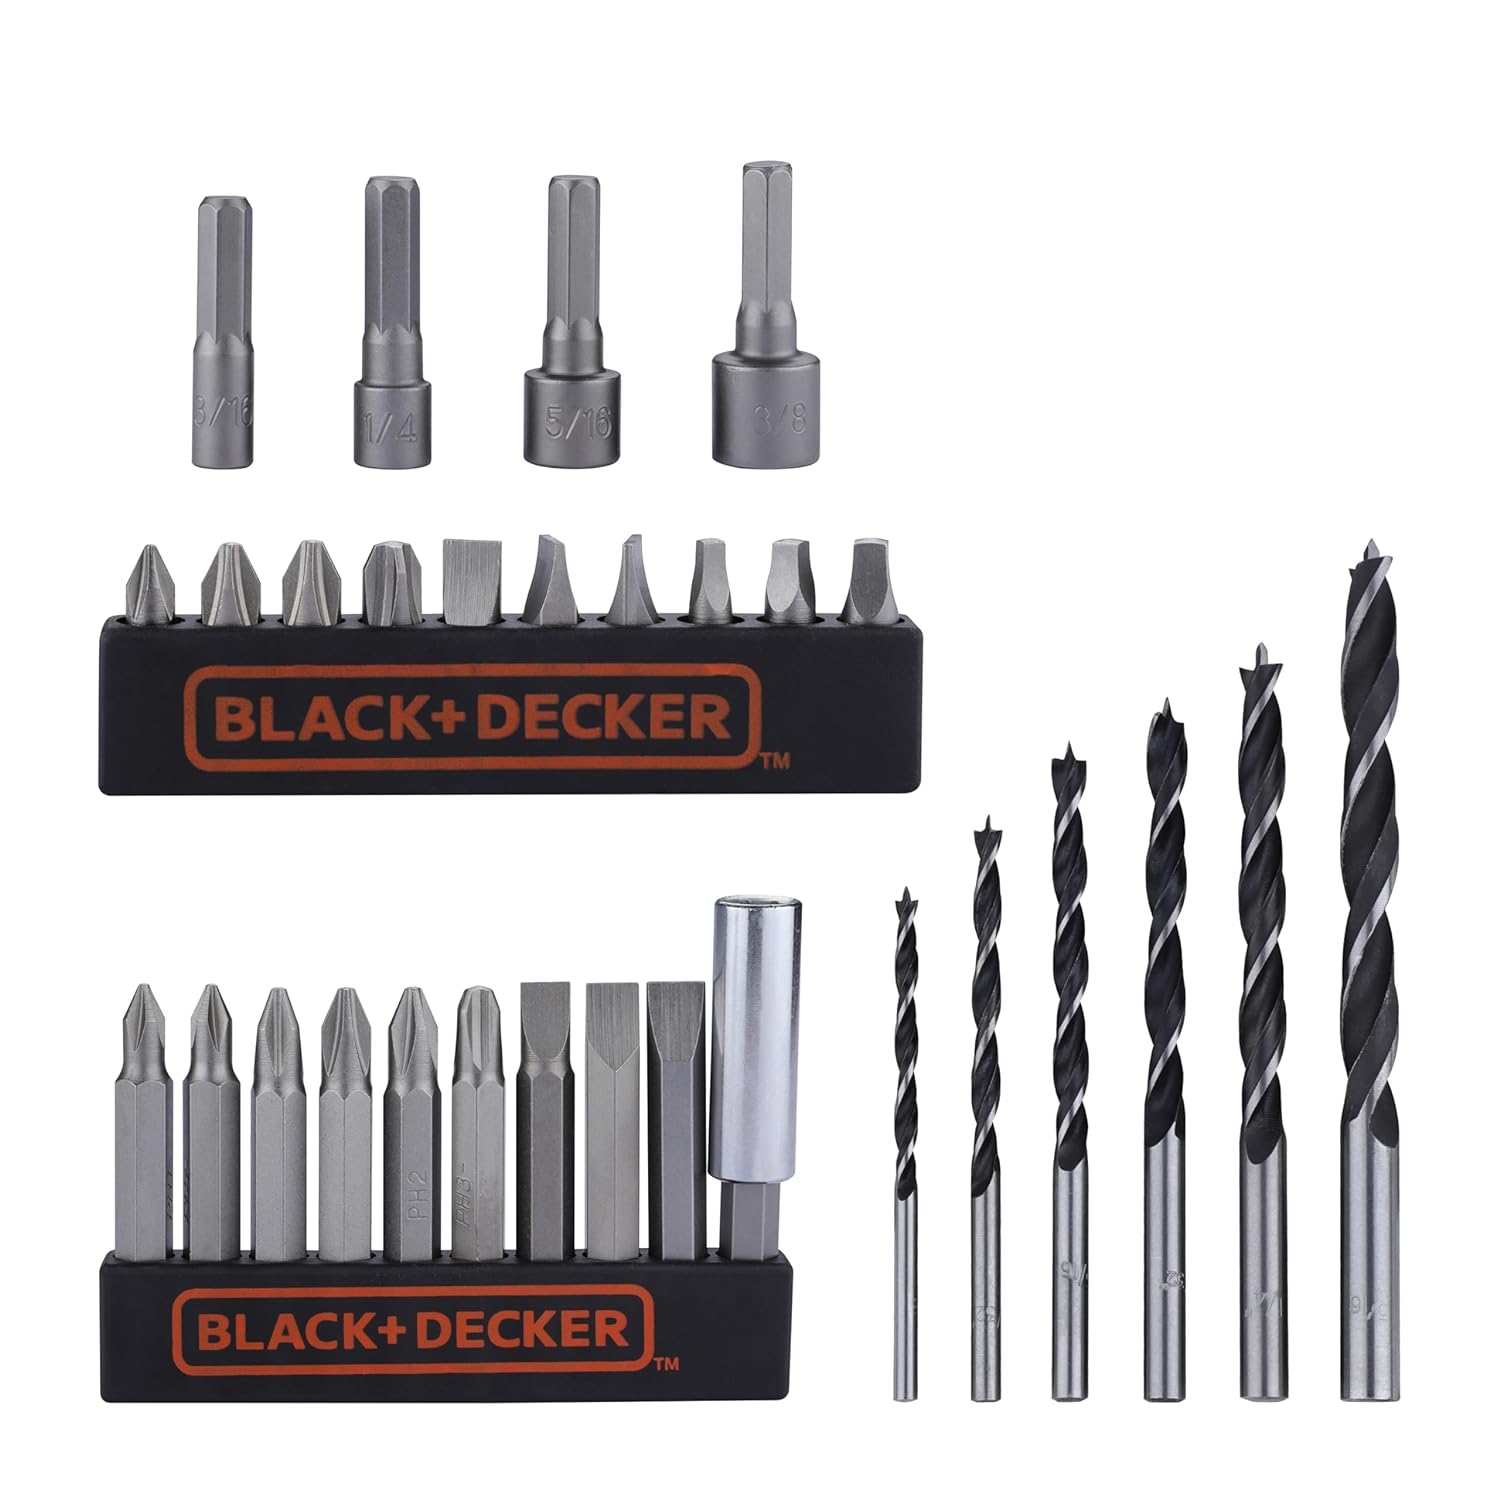 Black + Decker: LD120VA 20V MAX POWER CONNECT Li-Ion Cordless Drill/Driver Set